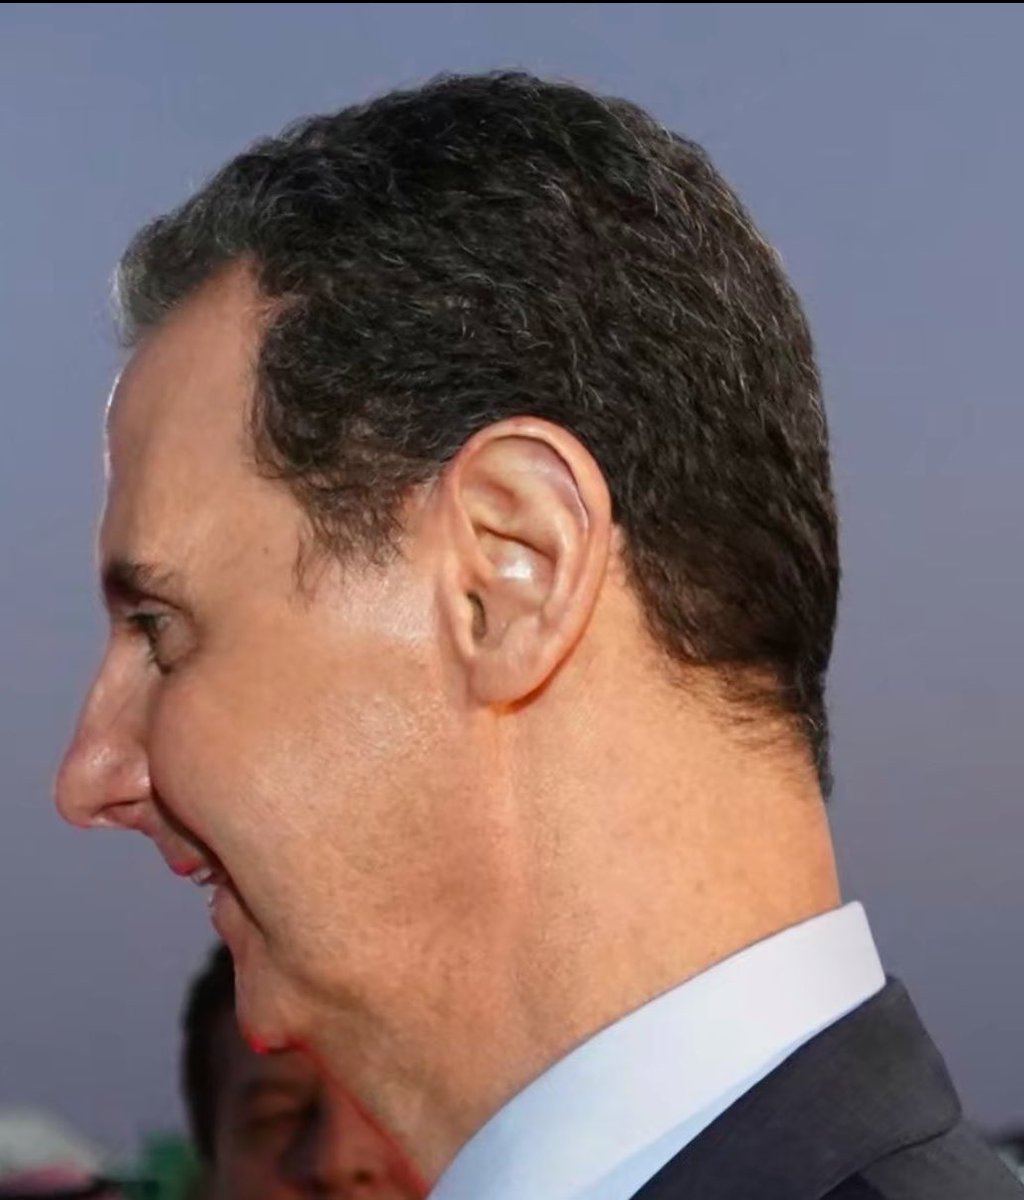 Bashar looks like a mental asylum patient